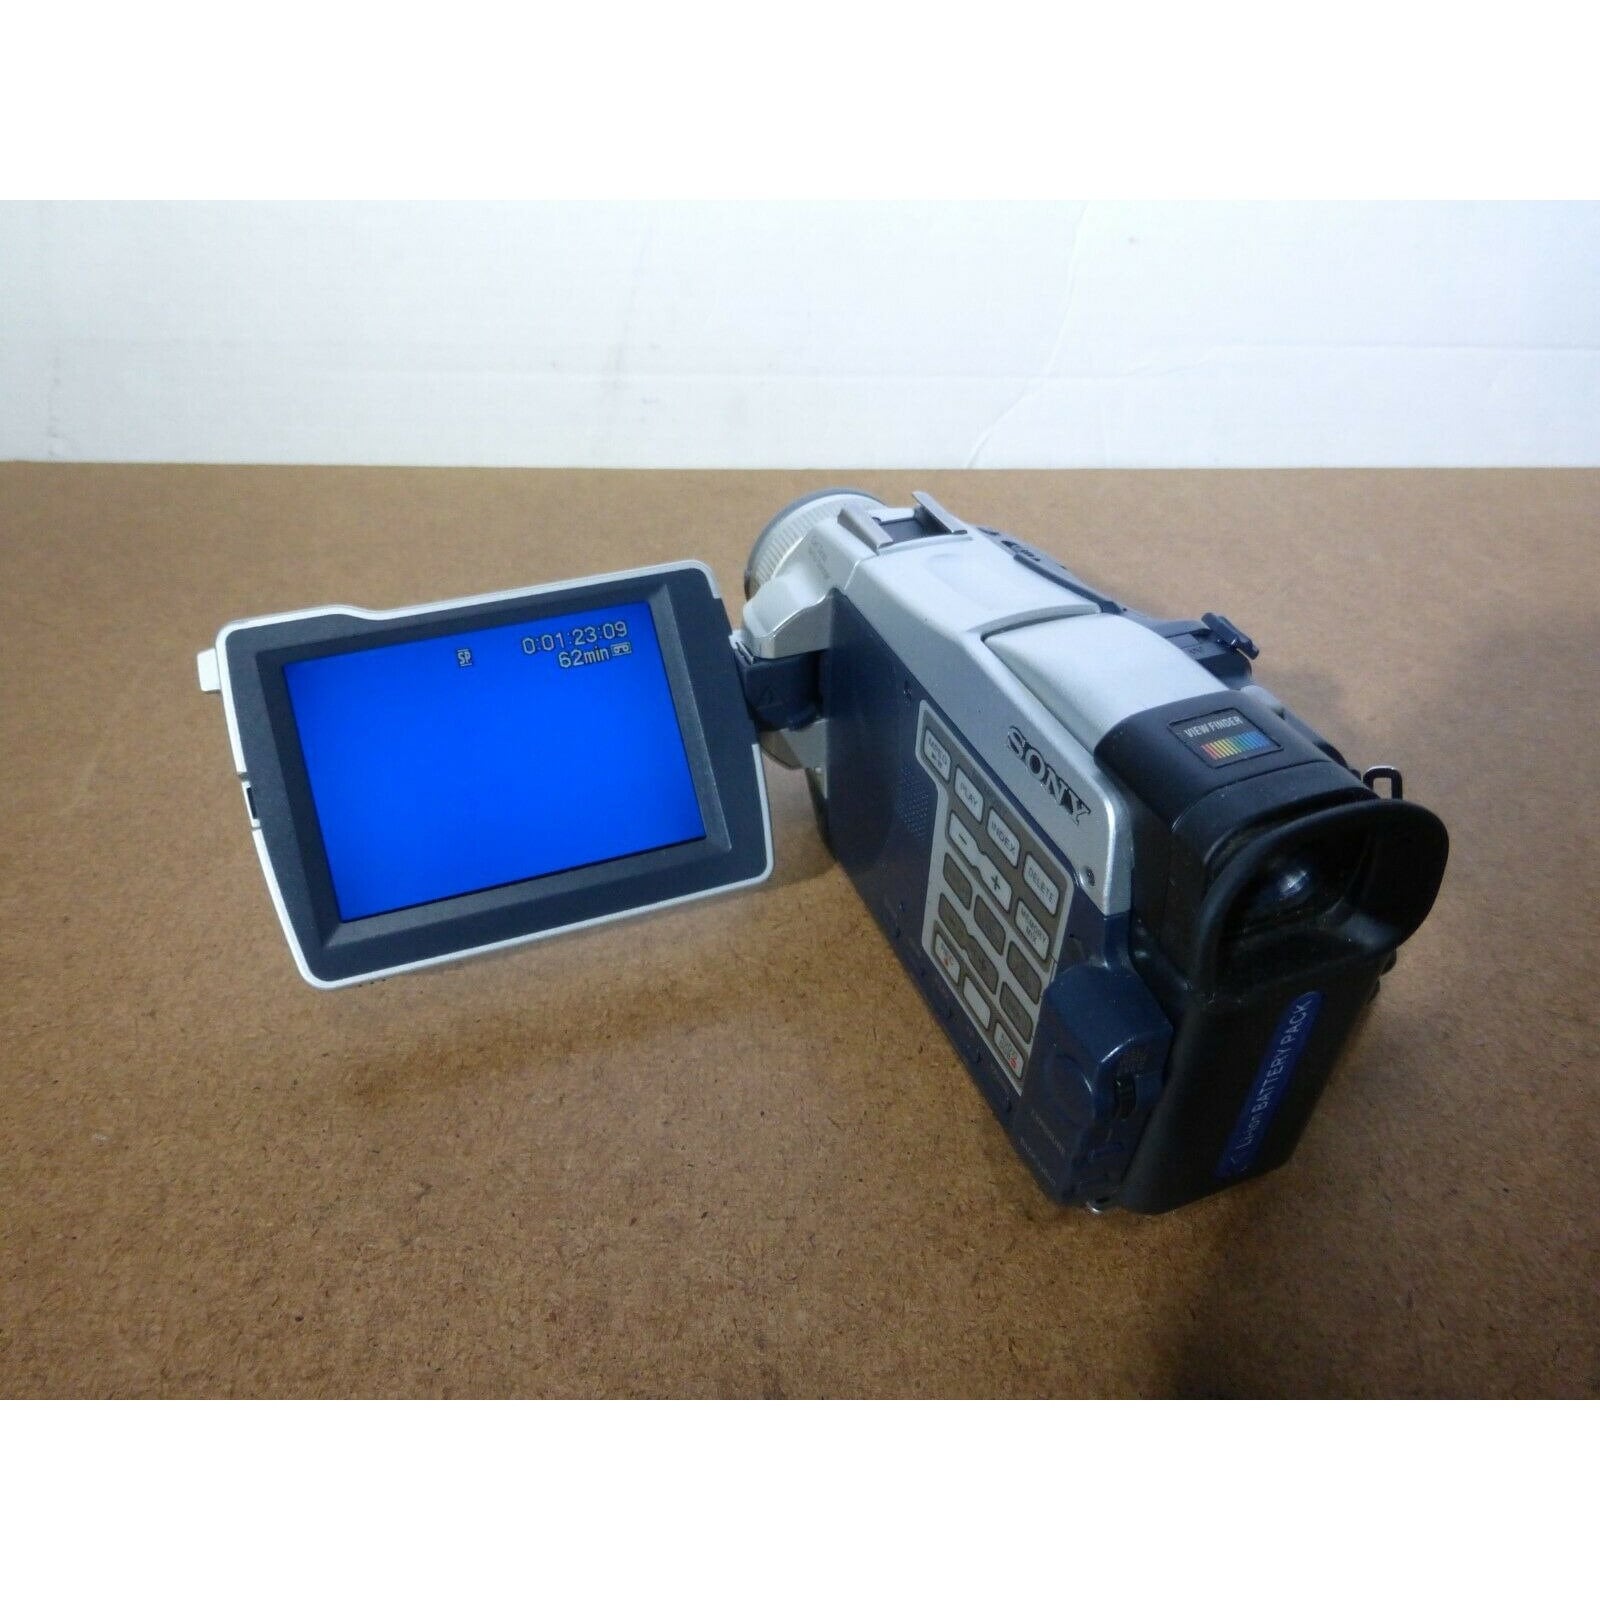 Sony Handycam Dcr-Trv27 MiniDV Camcorder